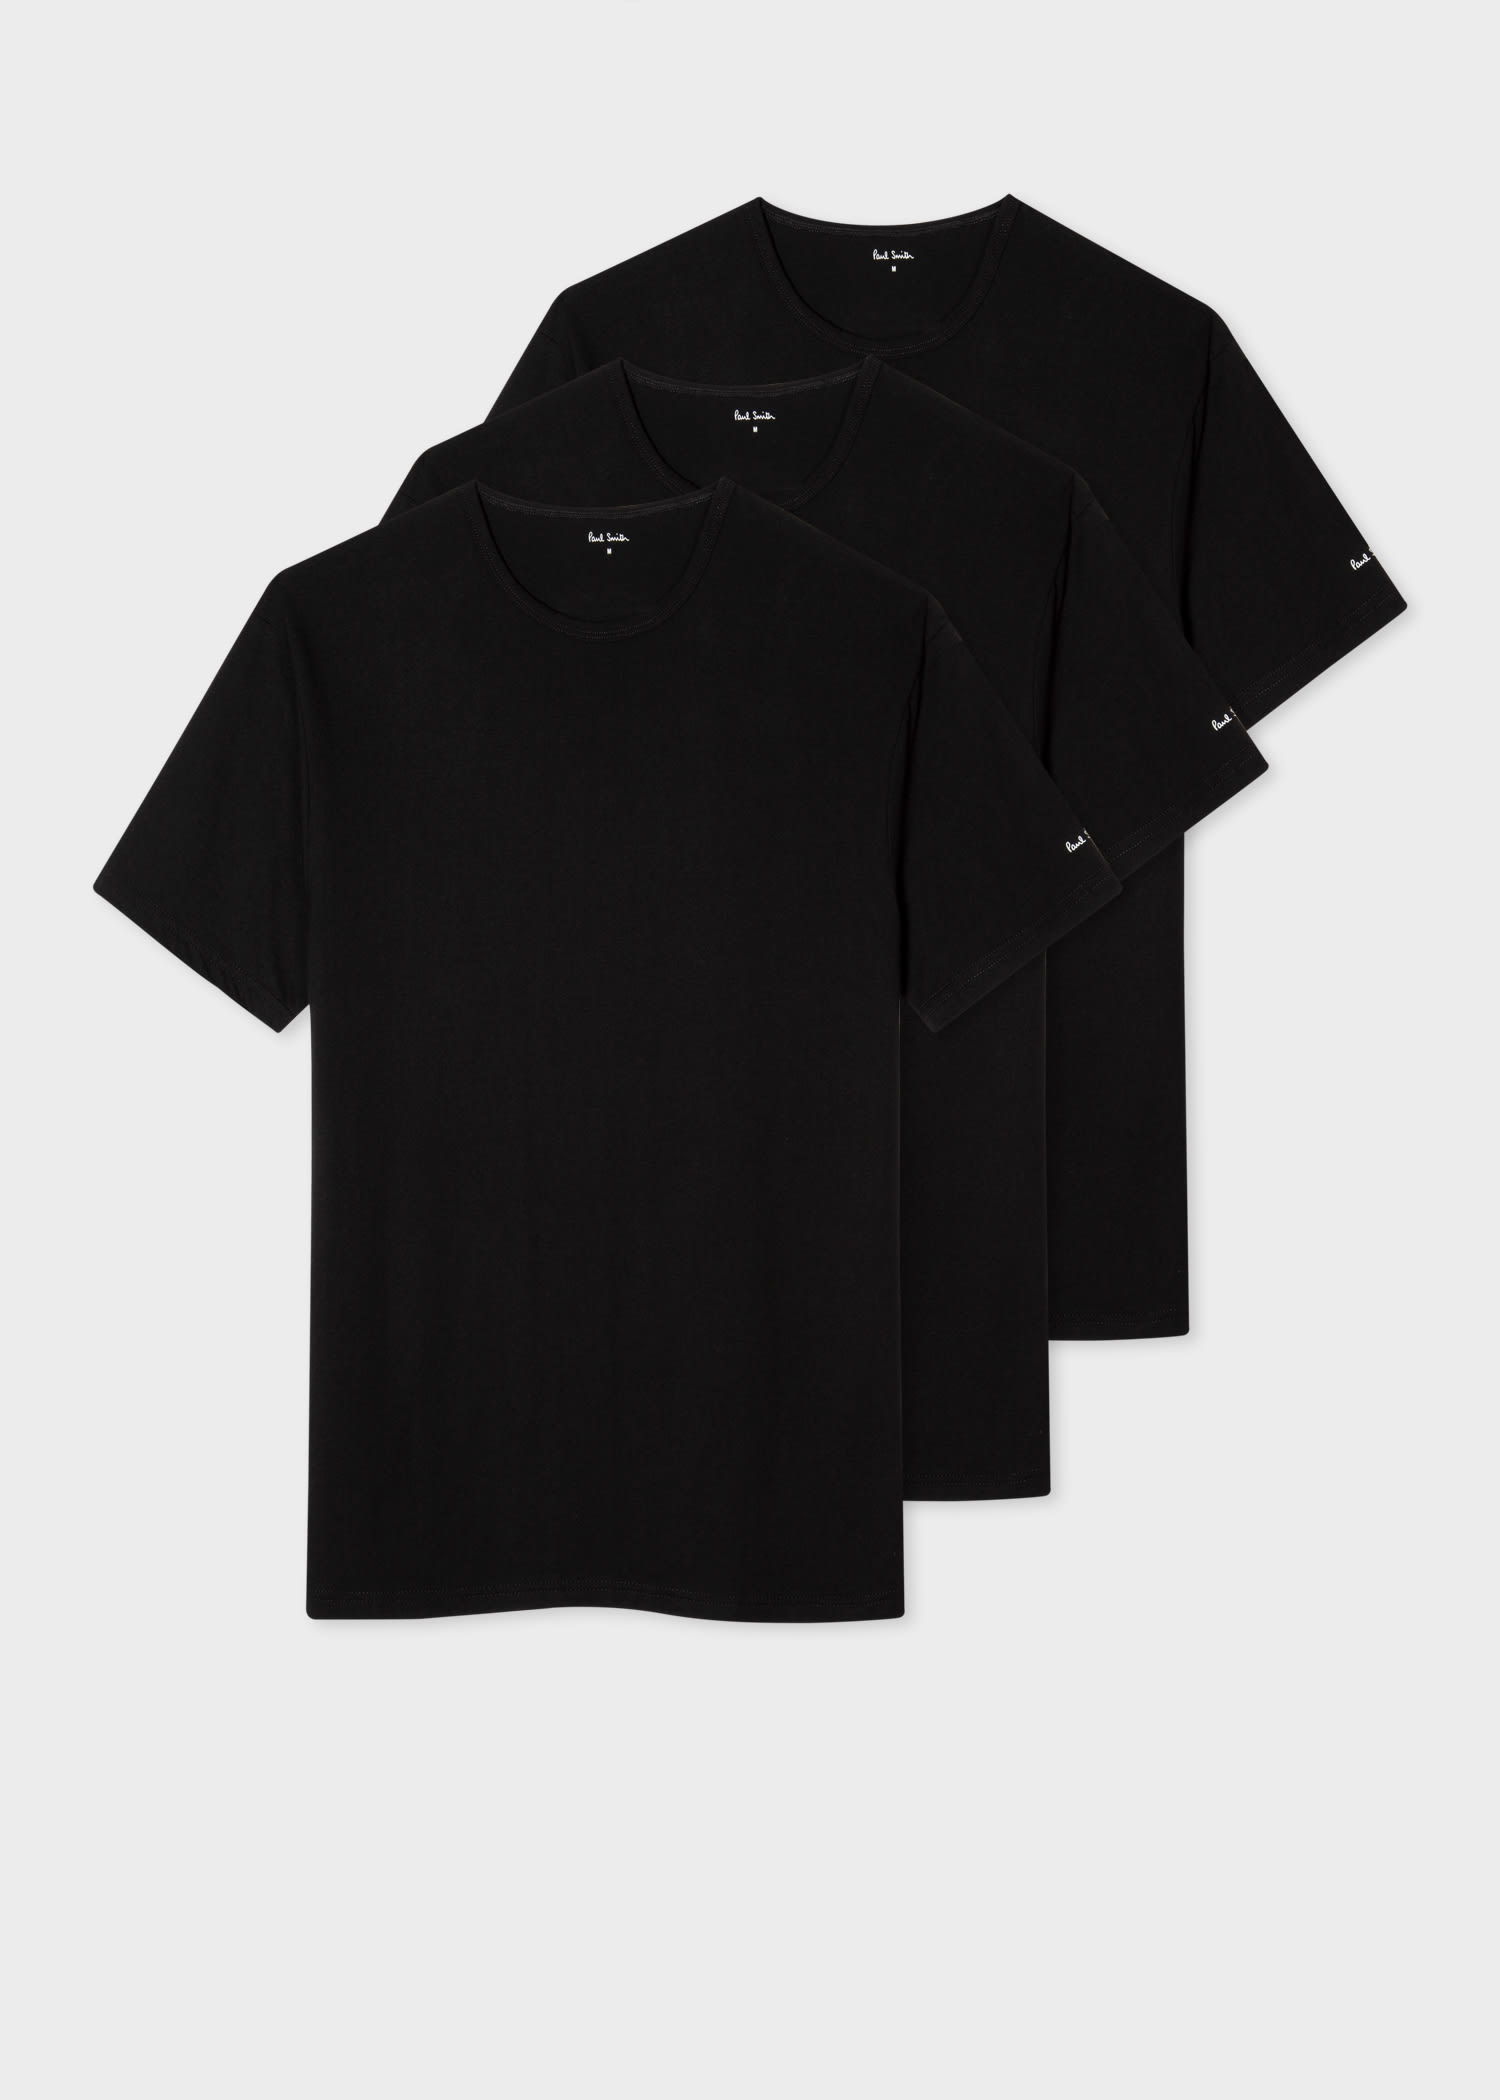 black tee shirt pack